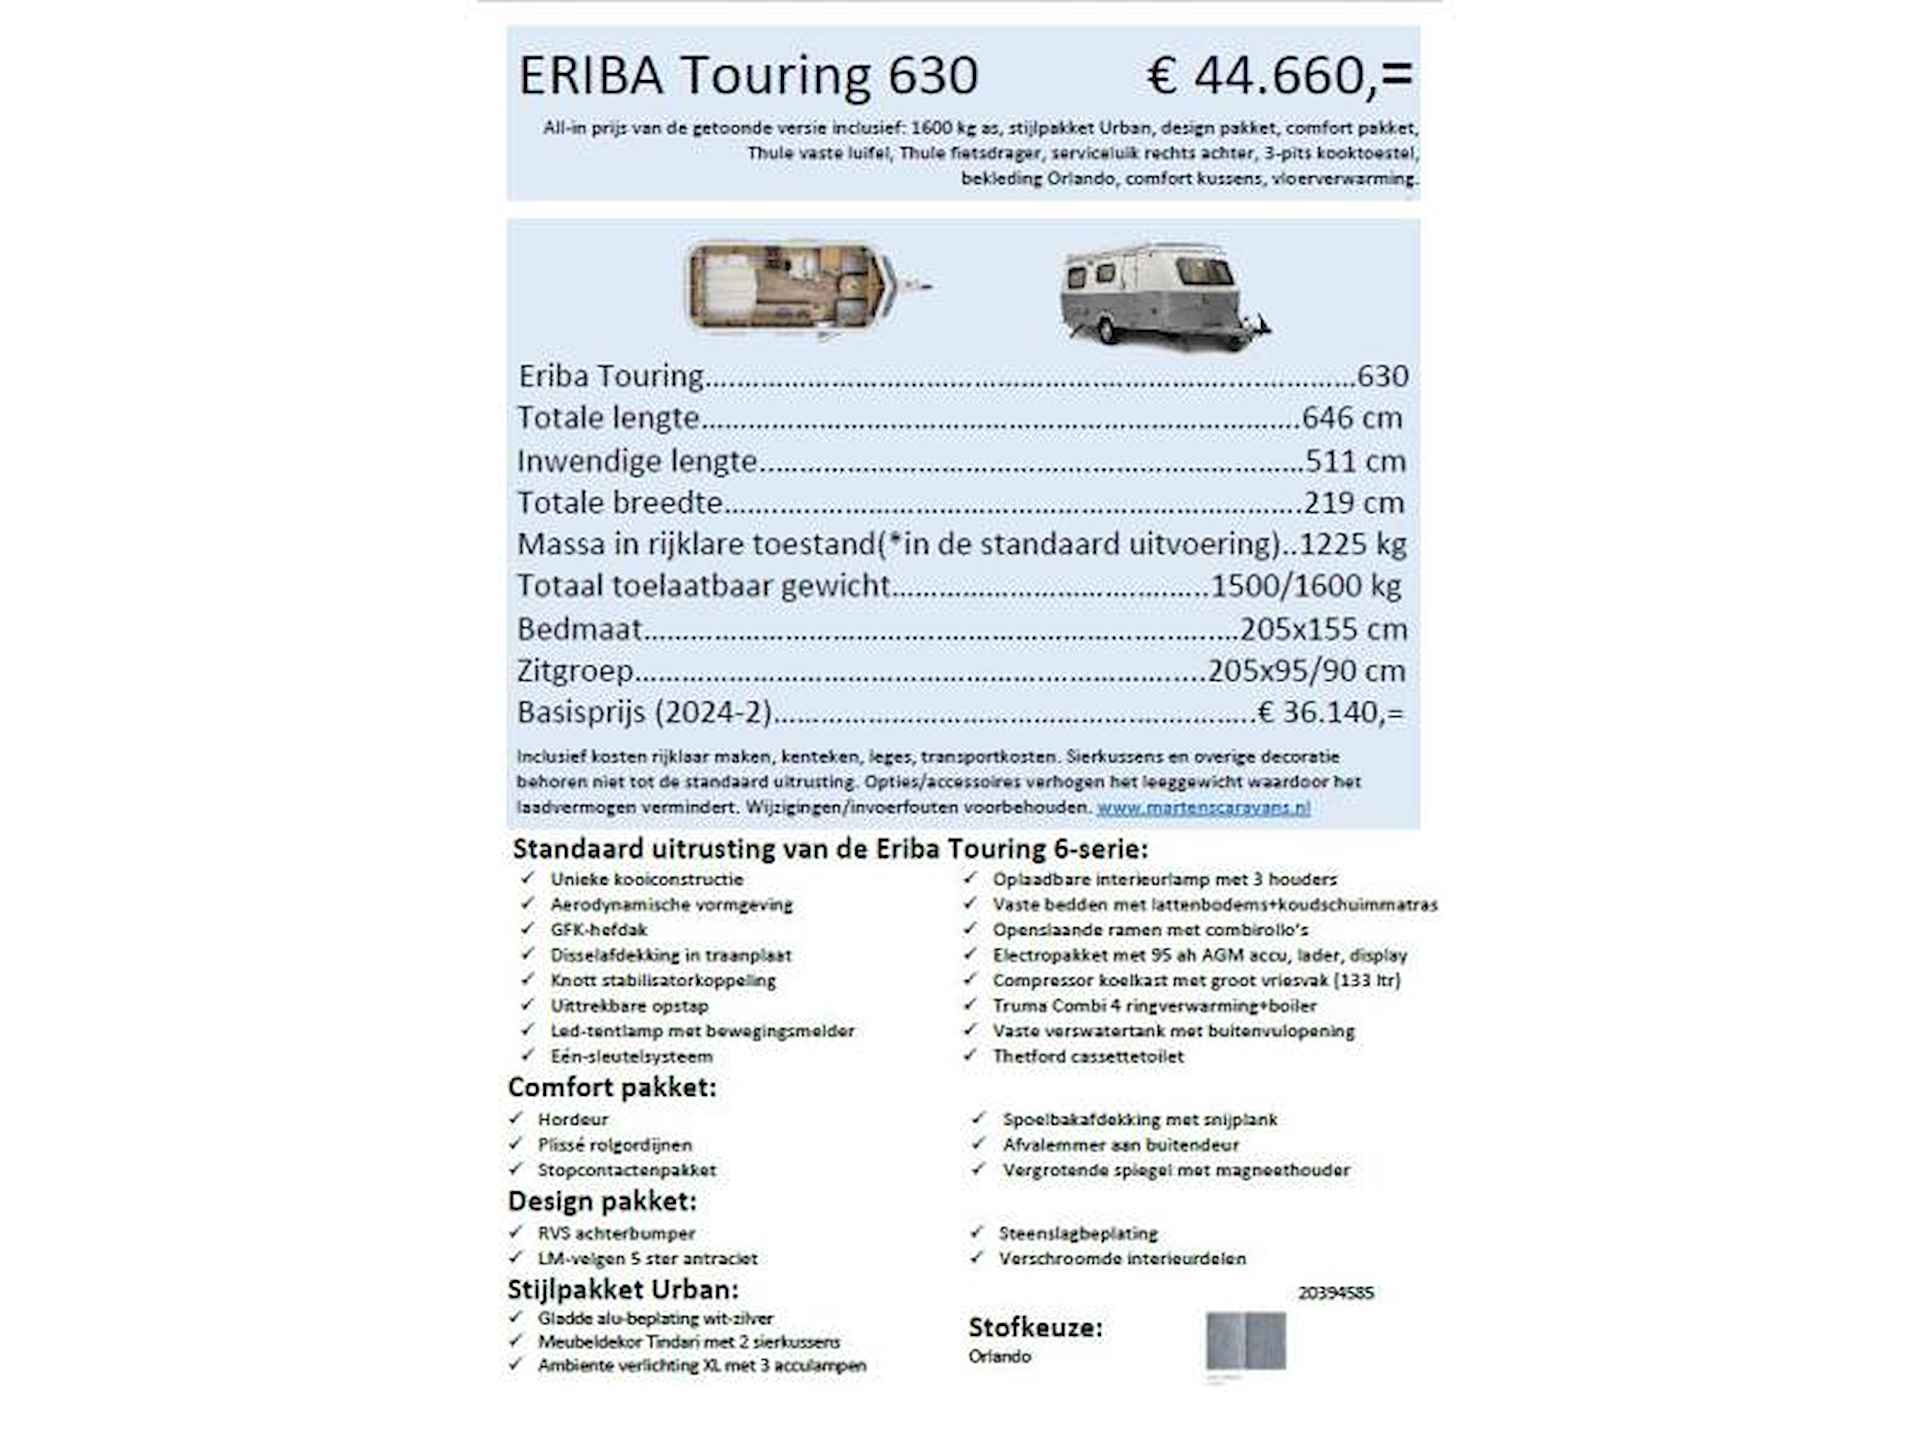 Eriba Touring 630 verwacht: najaar 24 - 9/9